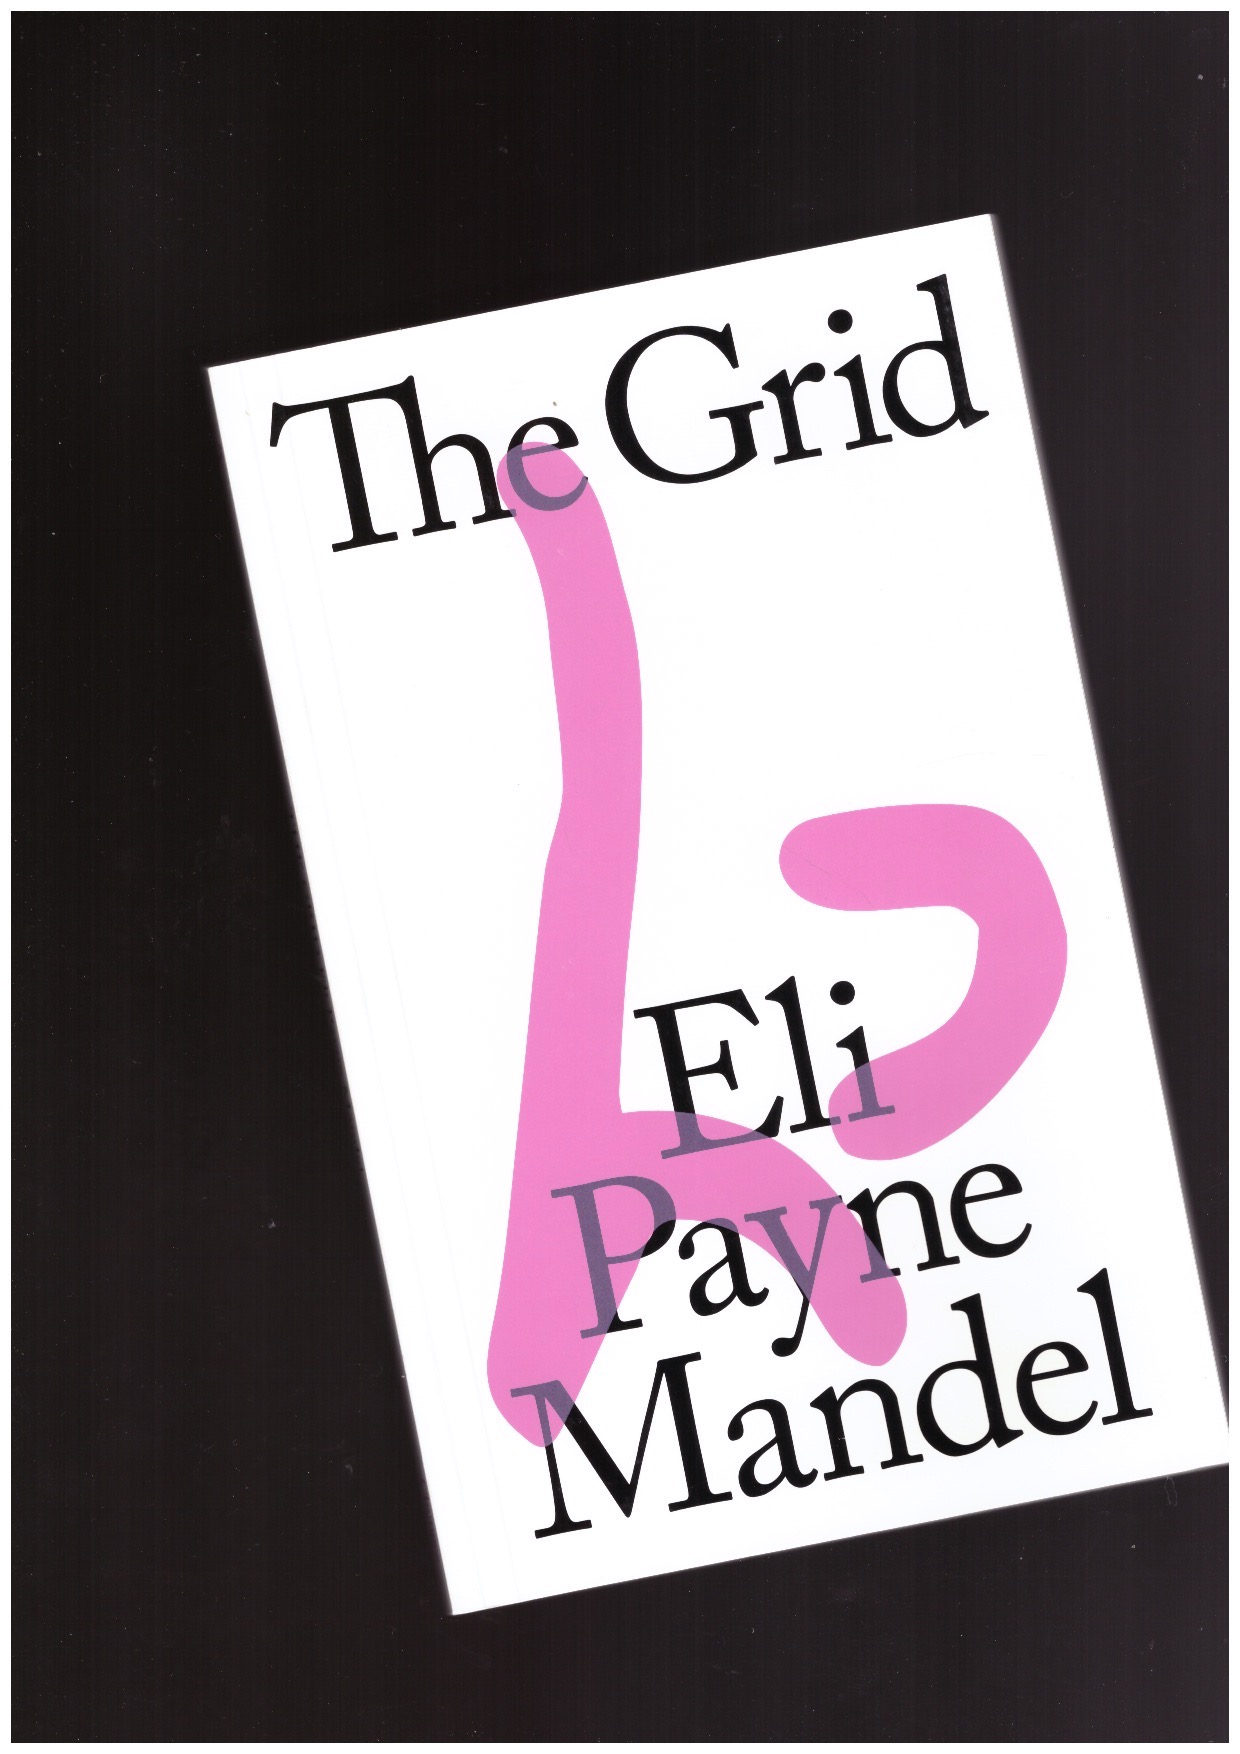 PAYNE MANDEL, Eli - The Grid